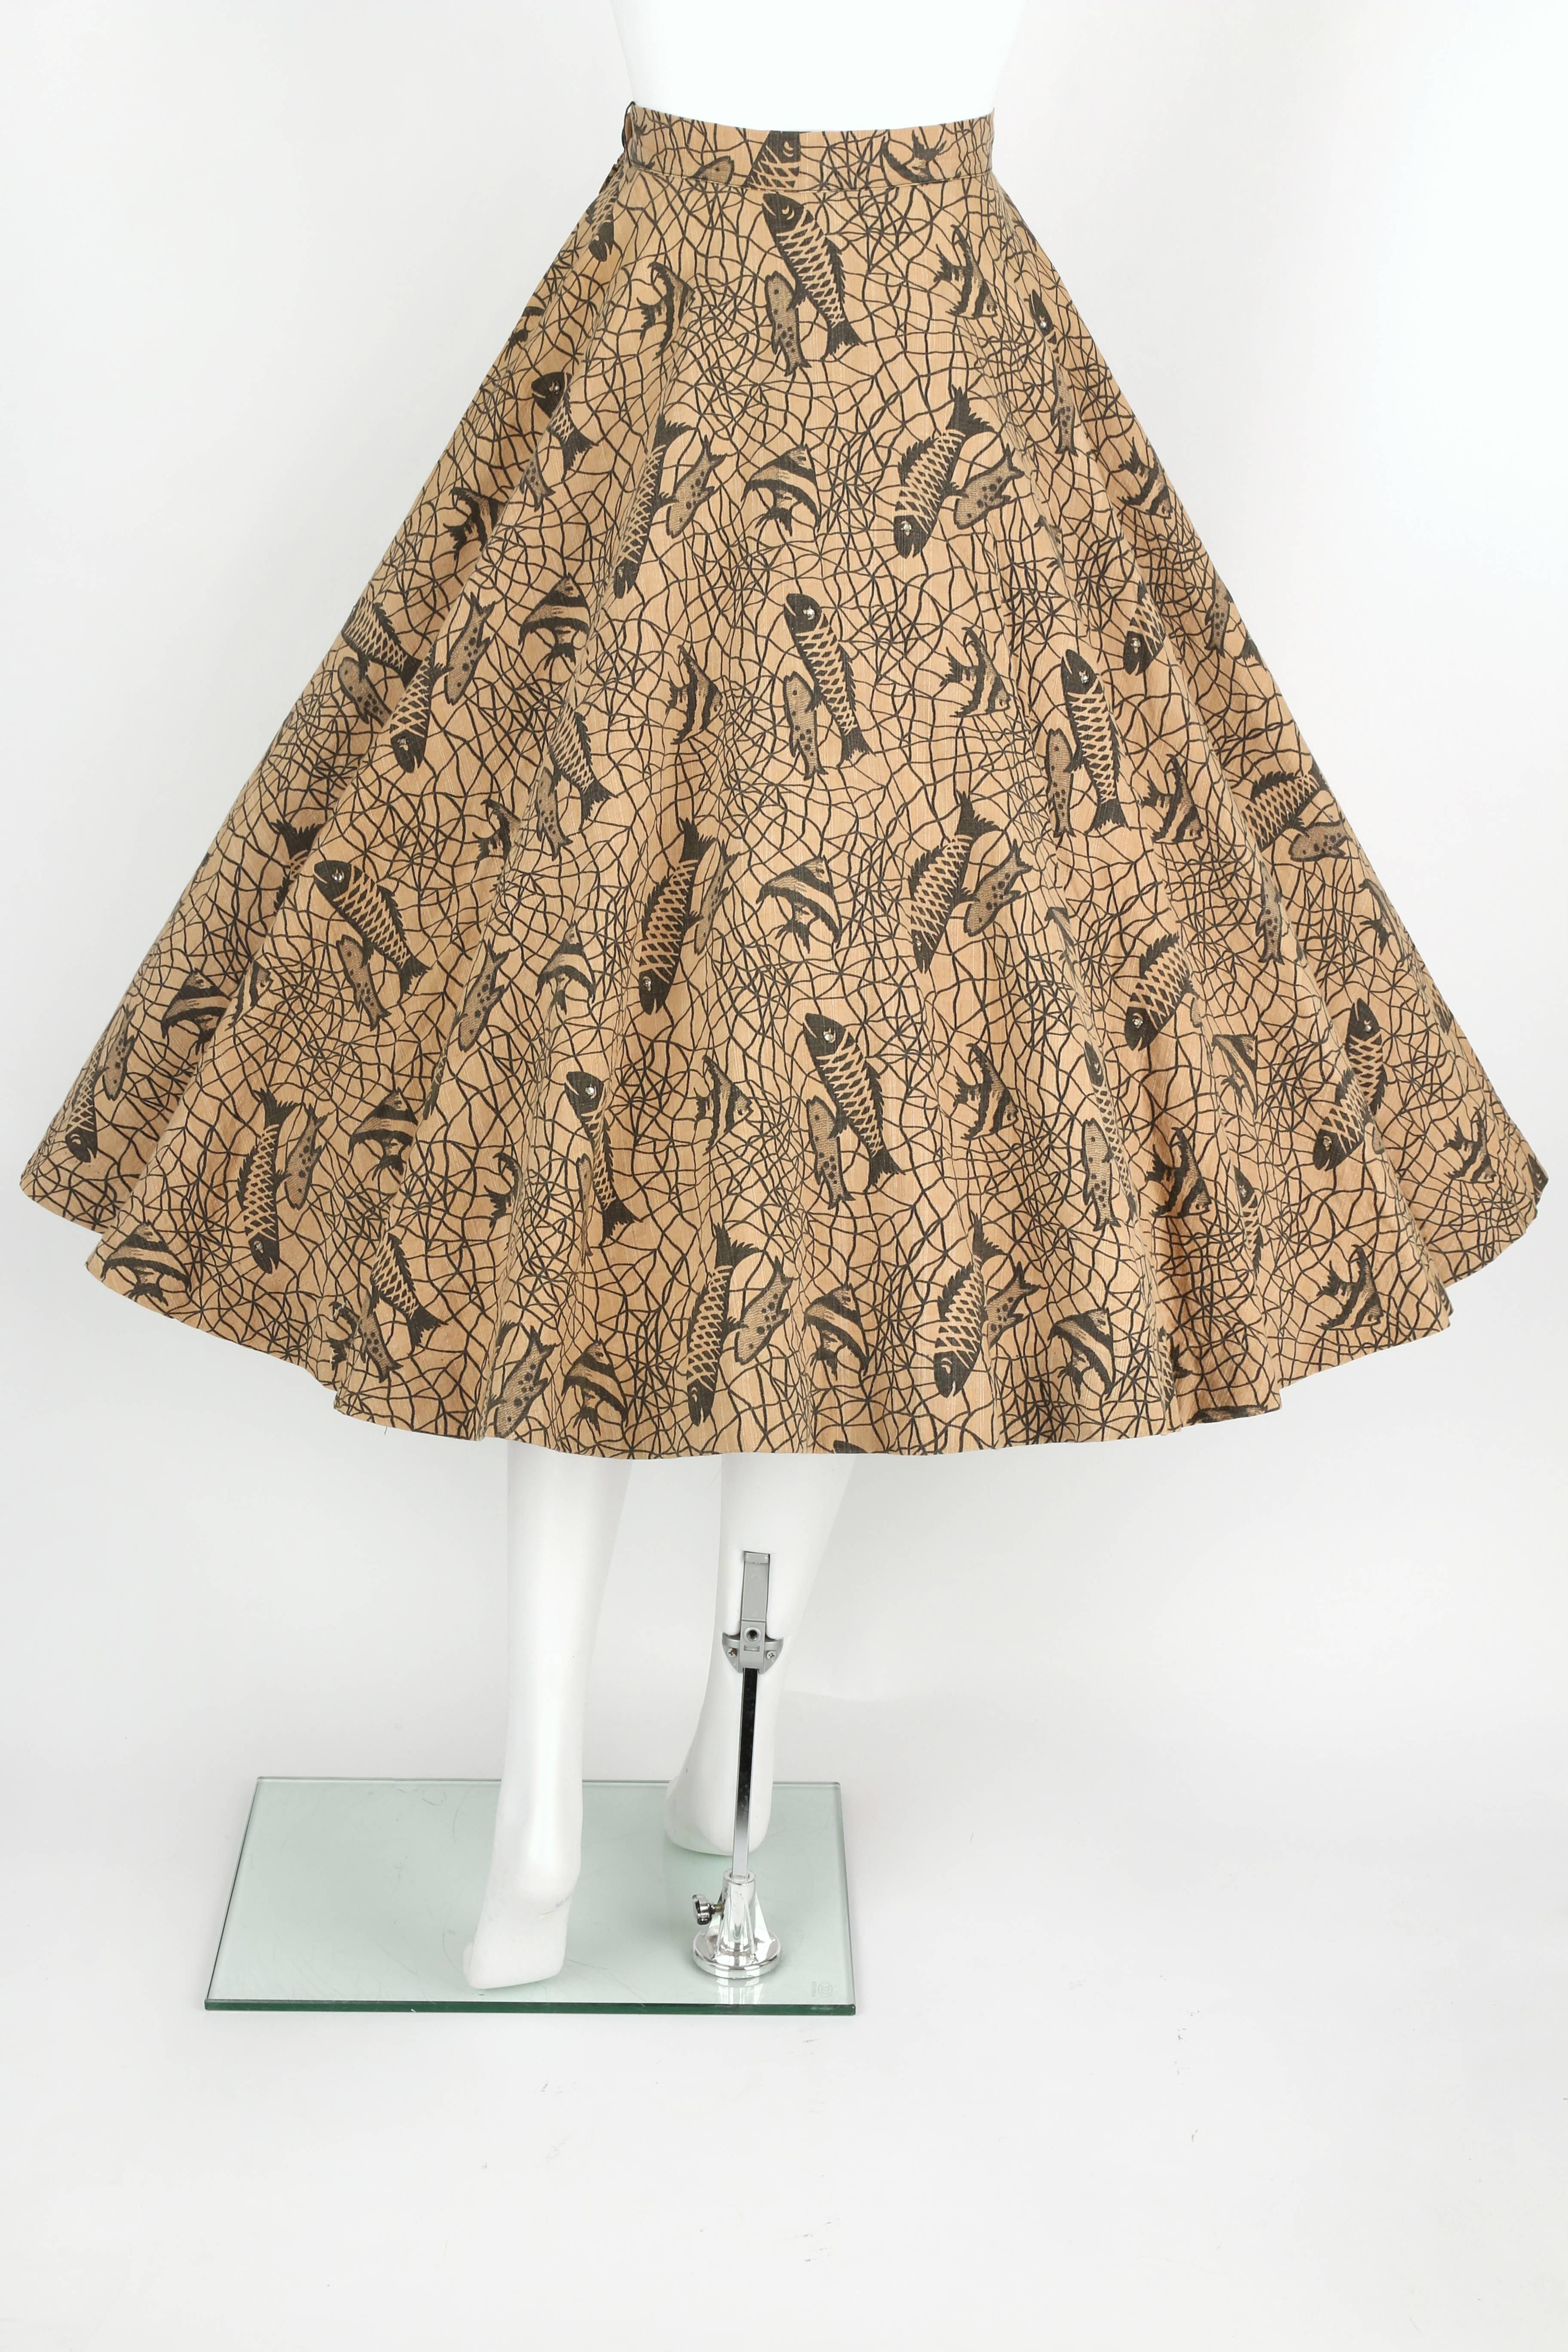 Women's COUTURE c.1950's Tan Canvas Tropical Fish Print Rhinestone Circle Skirt OOAK